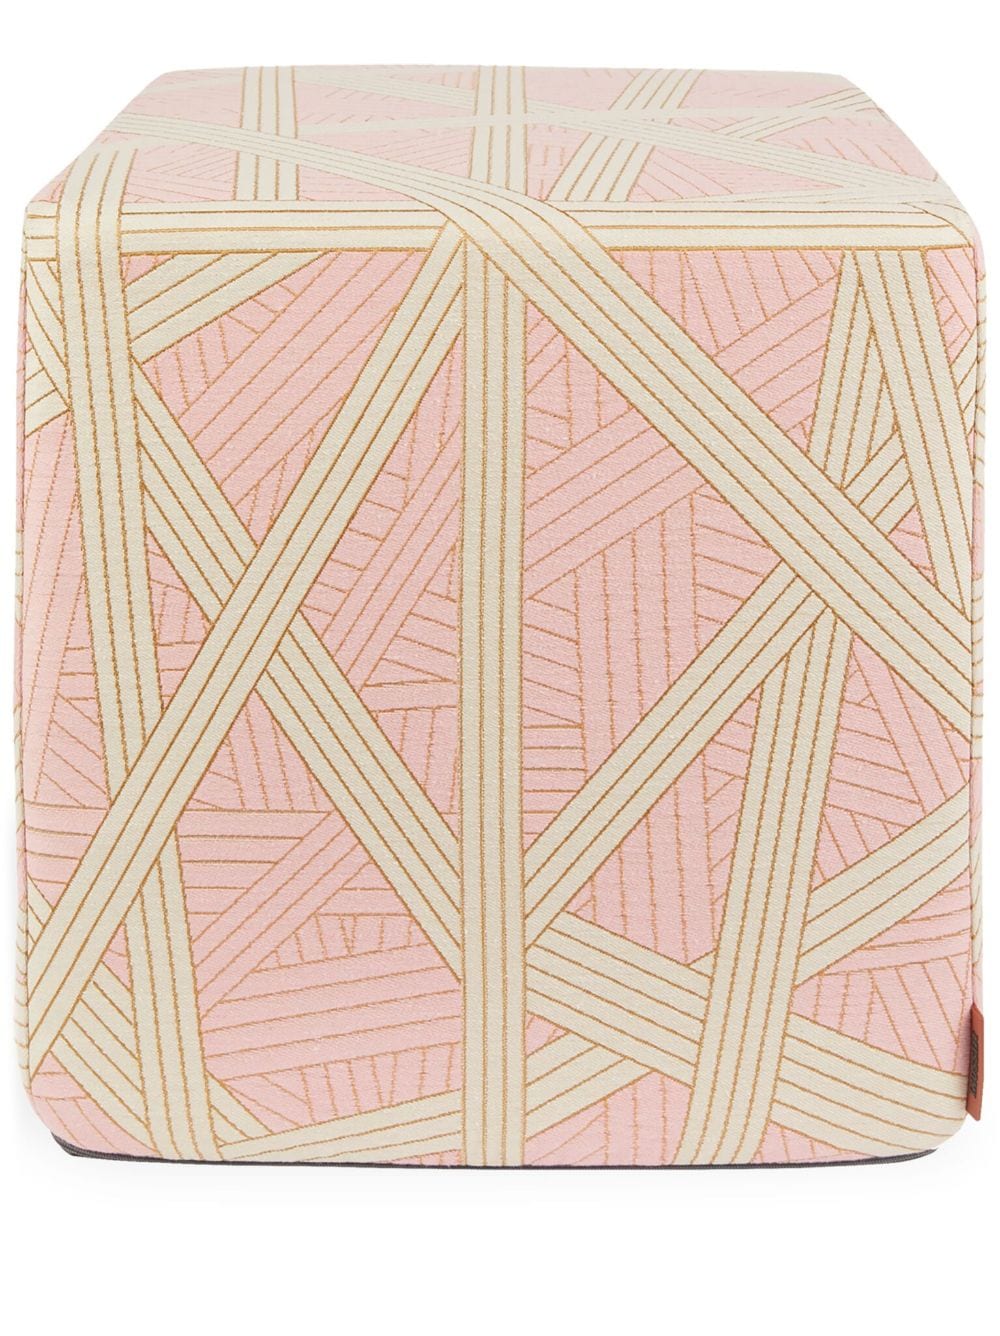 Missoni Nastri Multi-way Stripe Pouf Cube In Pink